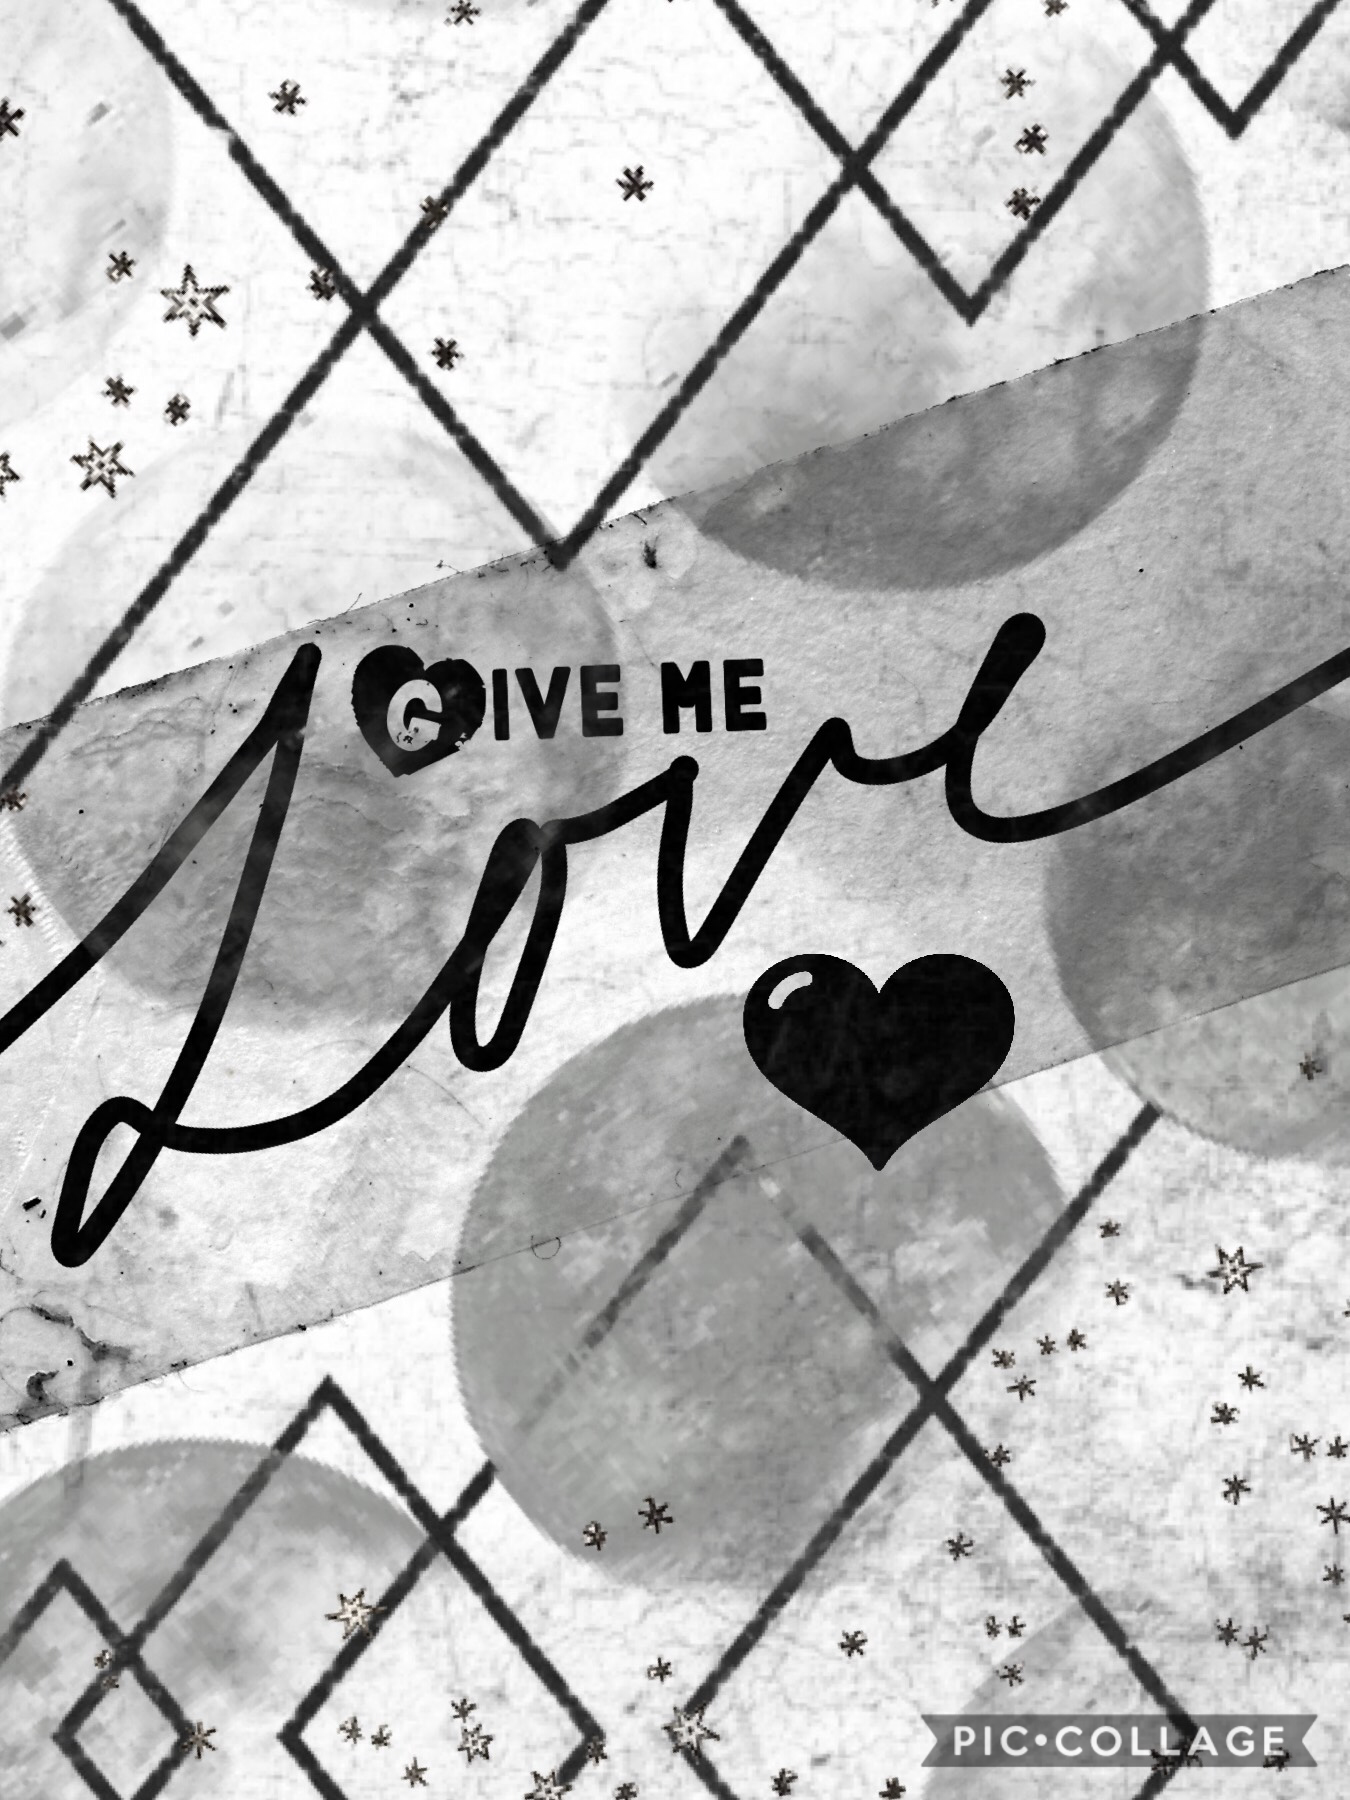 Give me love - Ed Sheeran 🖤